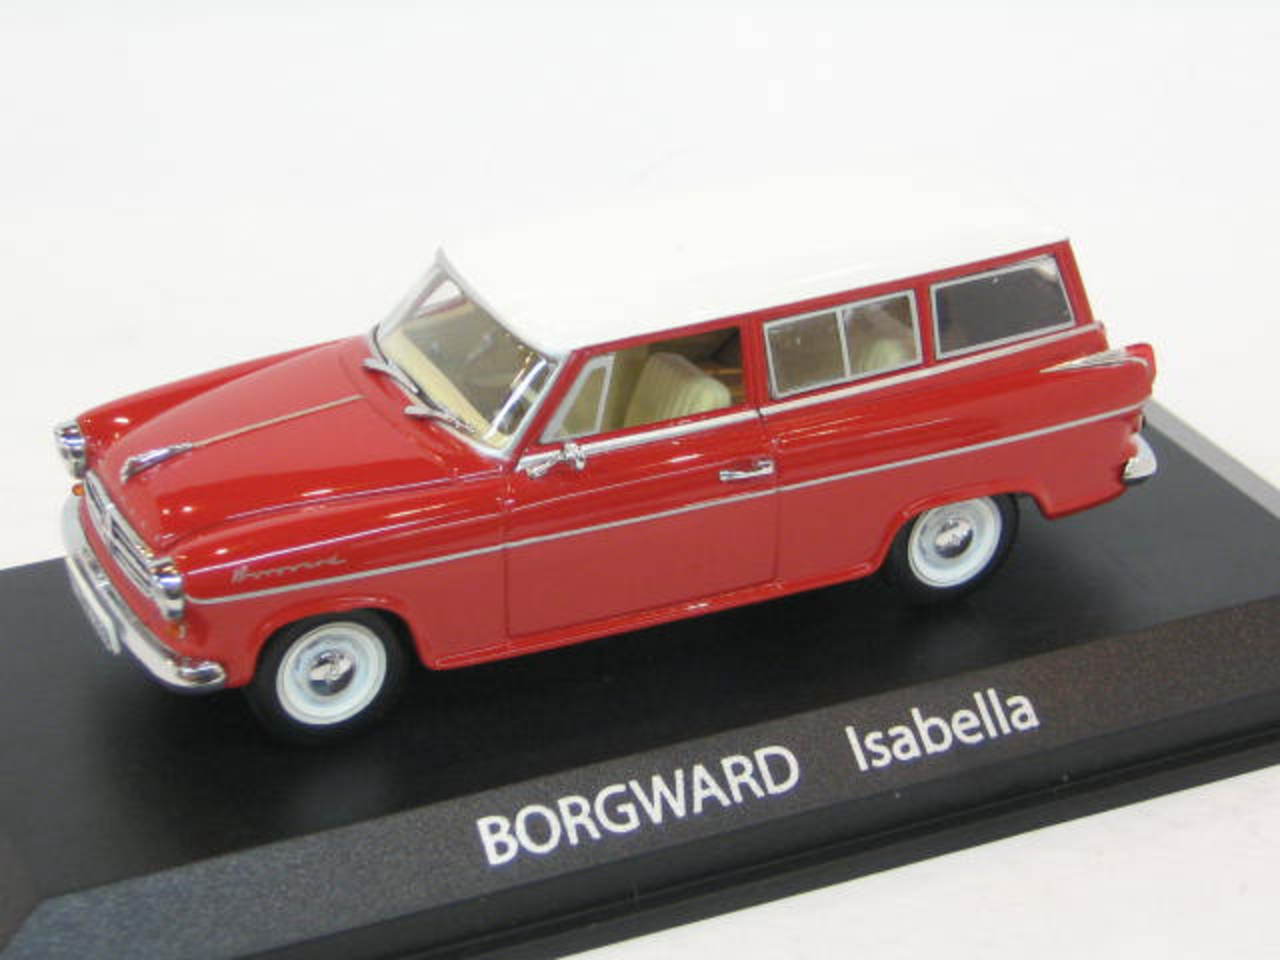 Borgward Isabella estate wagon